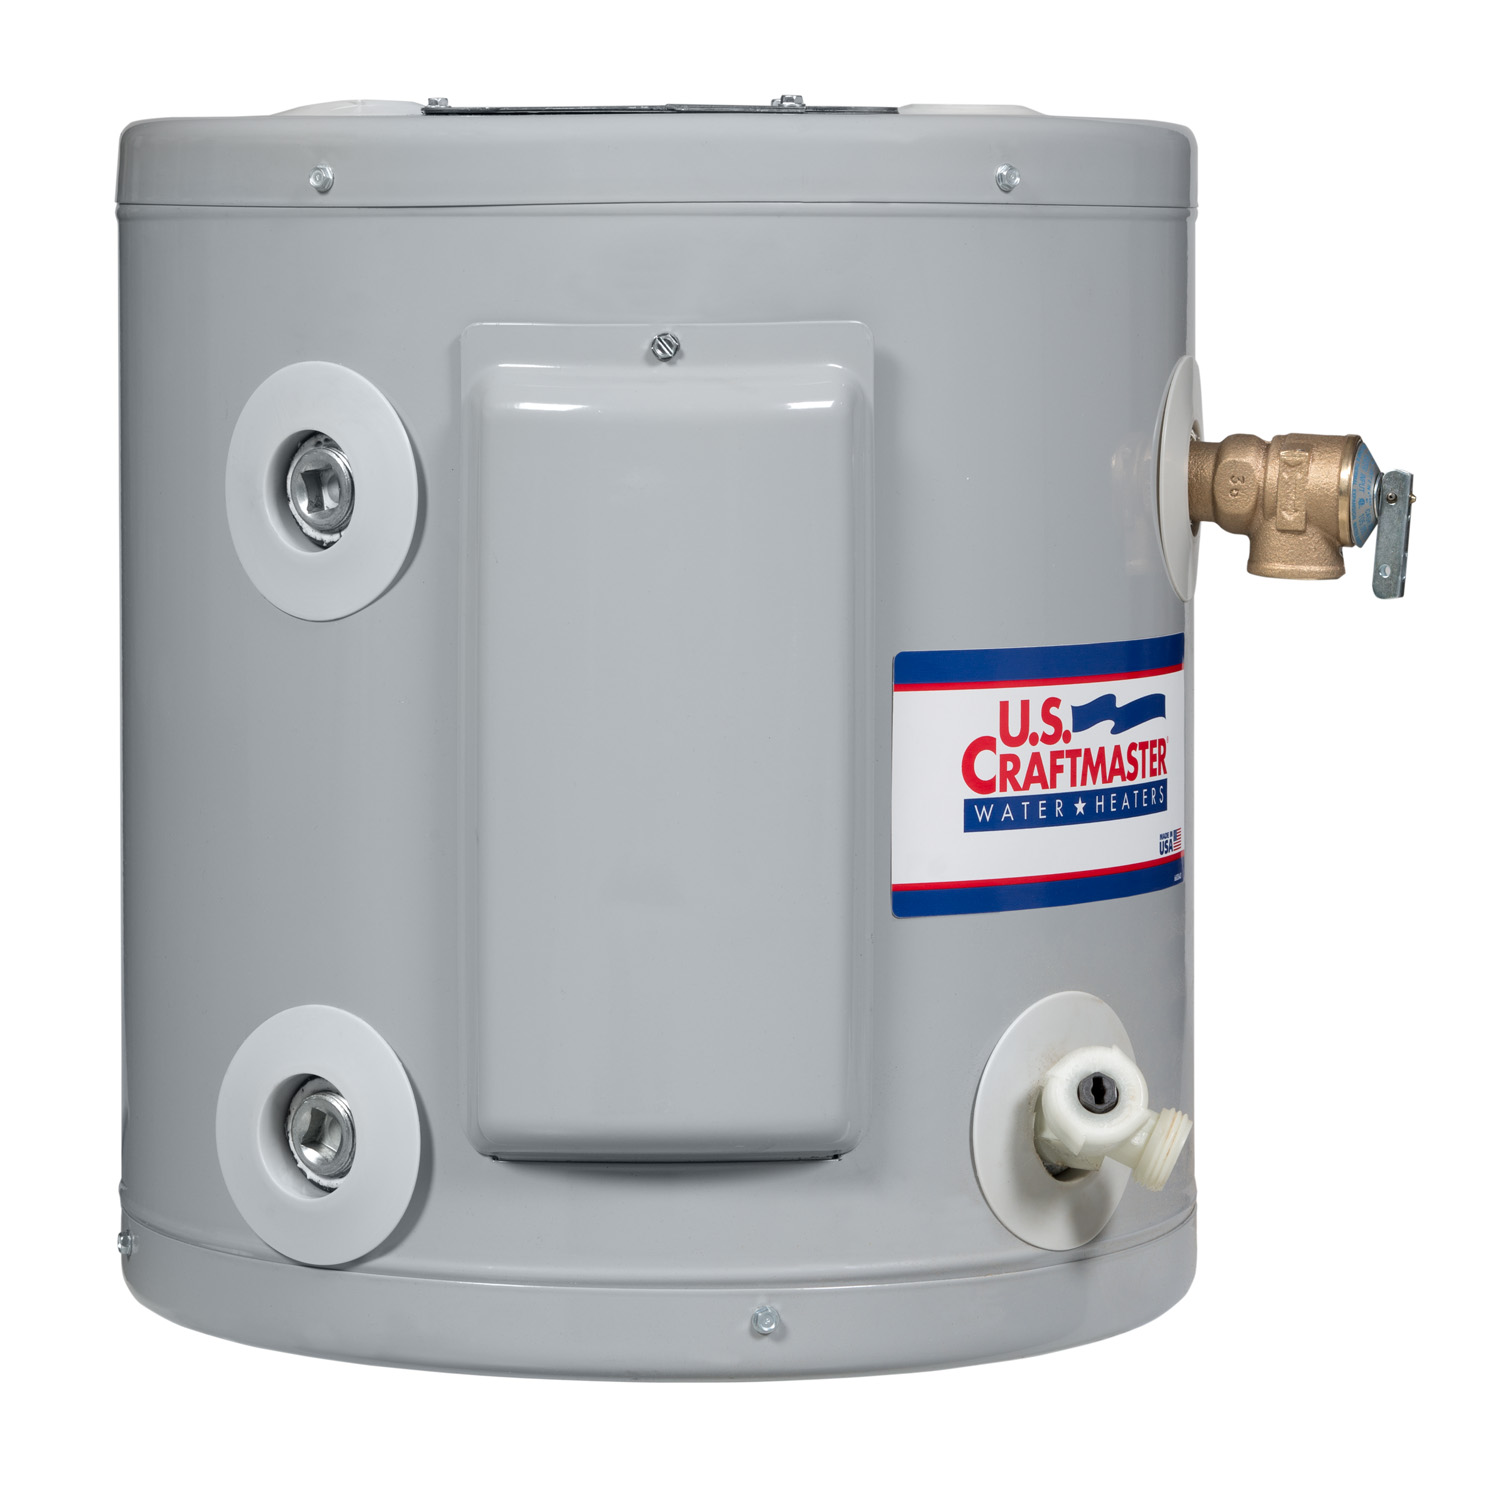 Media Bank - U. S. Craftmaster Water Heaters